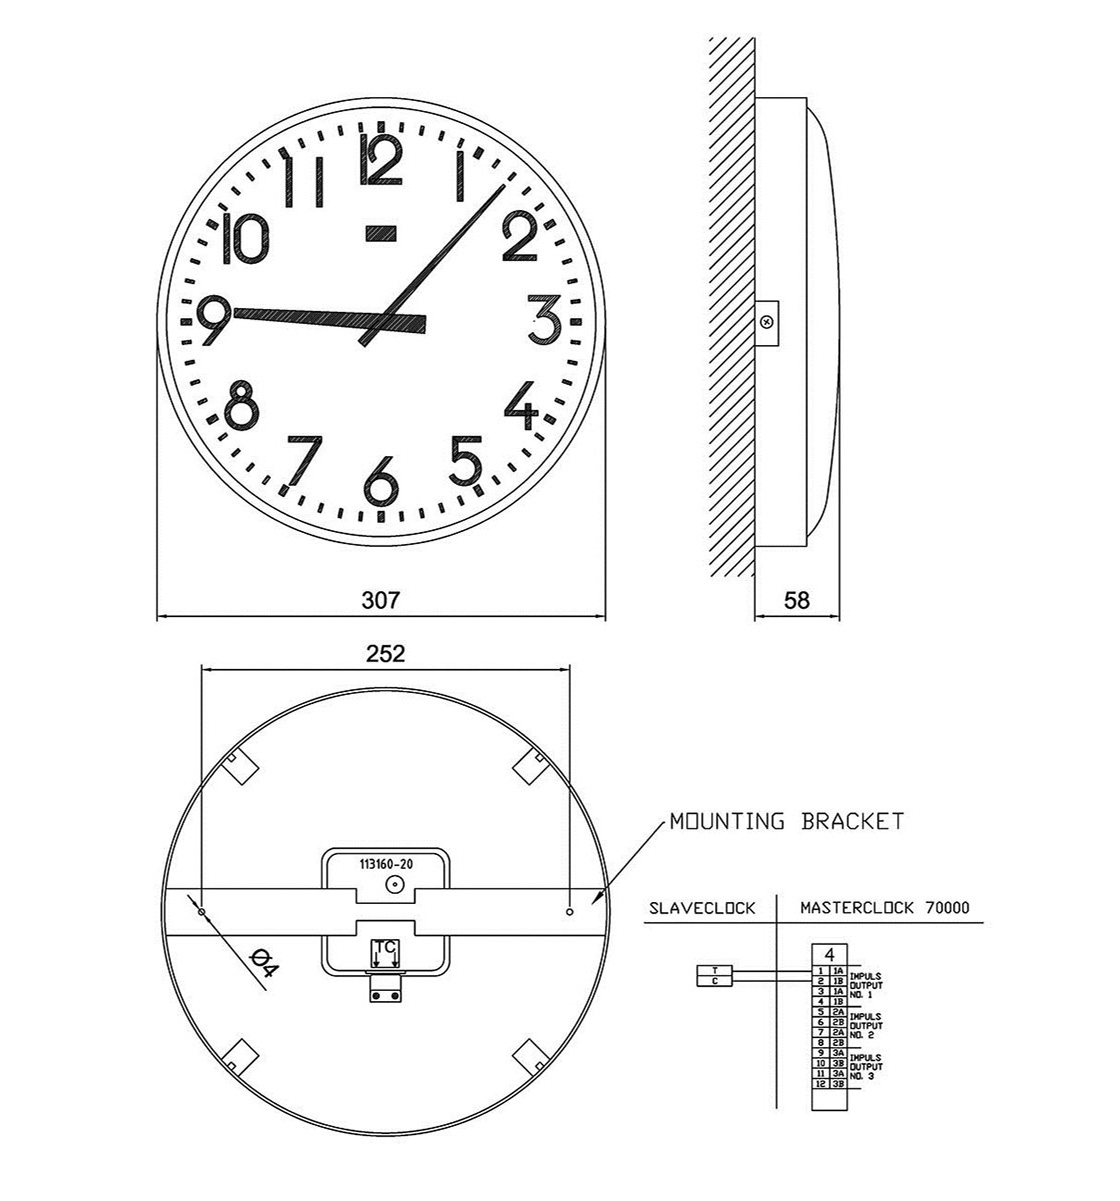 slave clock 2031580-10 vingtor stentofon dimensions